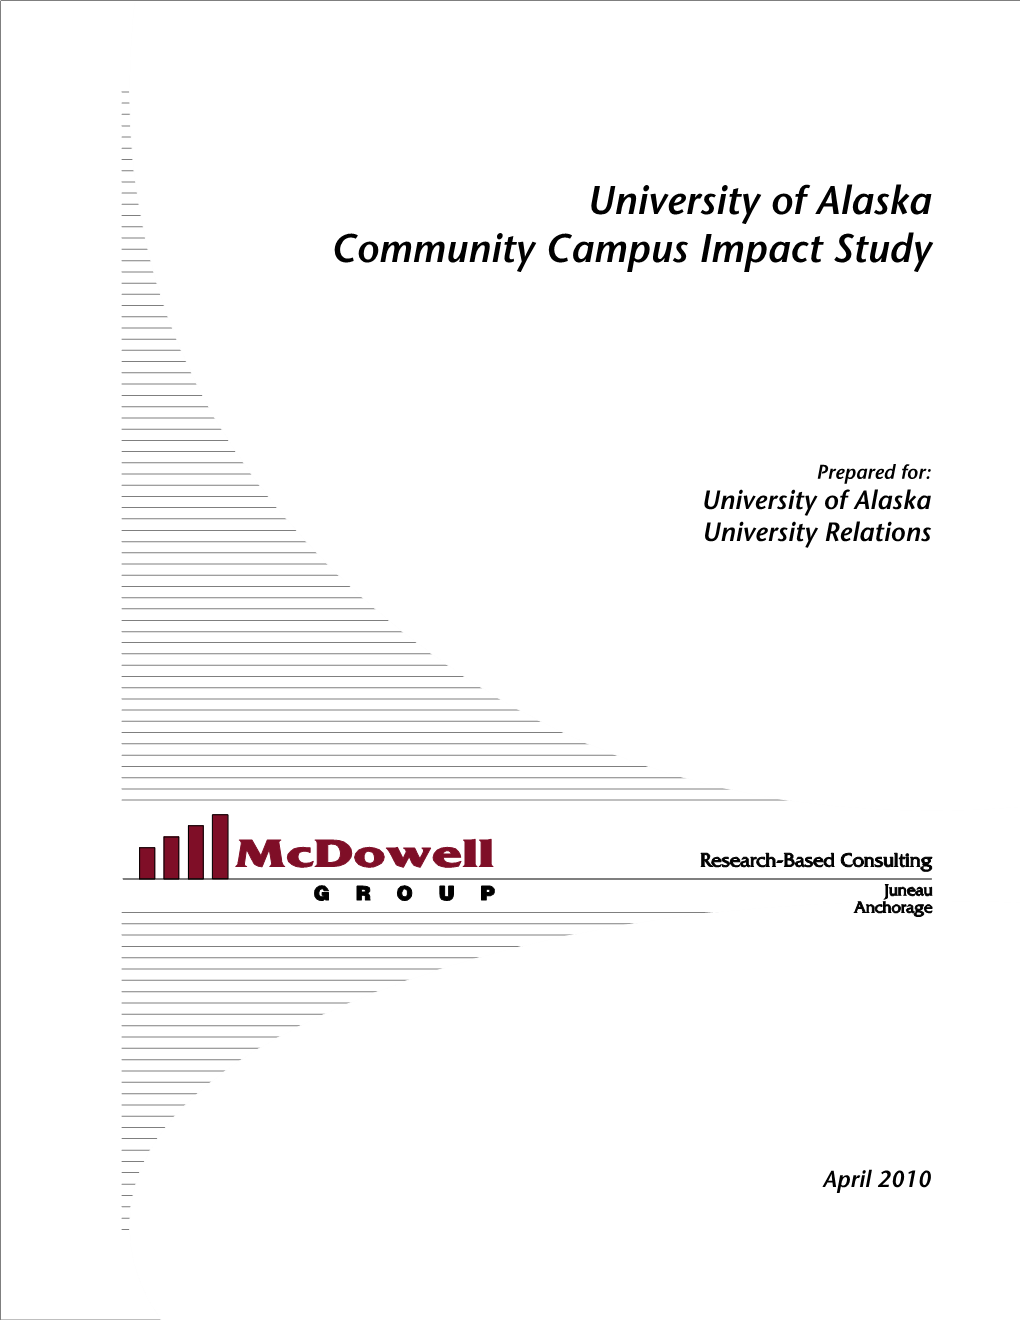 University of Alaska Community Campus Impact Study